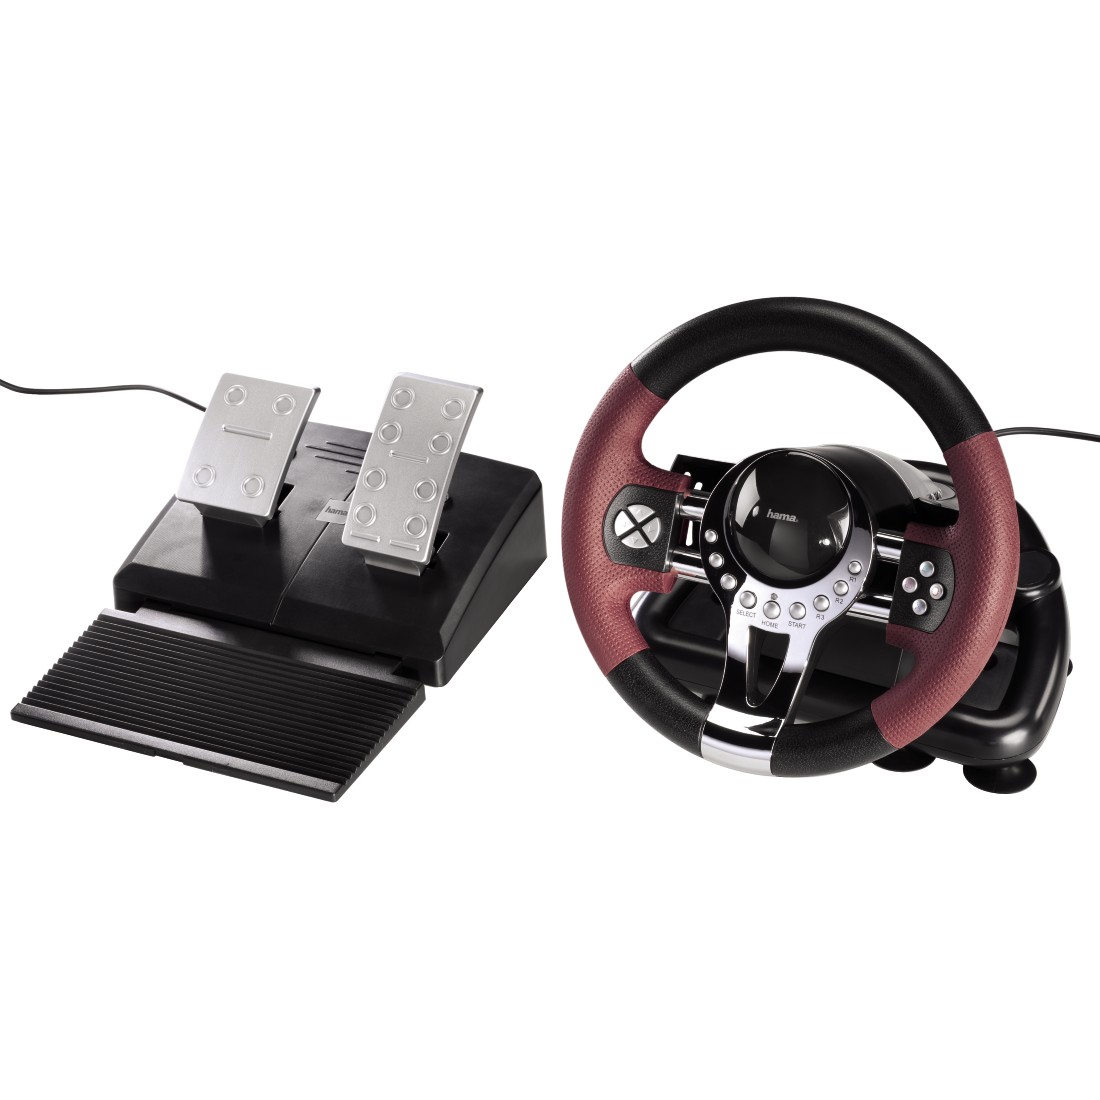 00051845 Hama Thunder V5 Racing Wheel for PS3